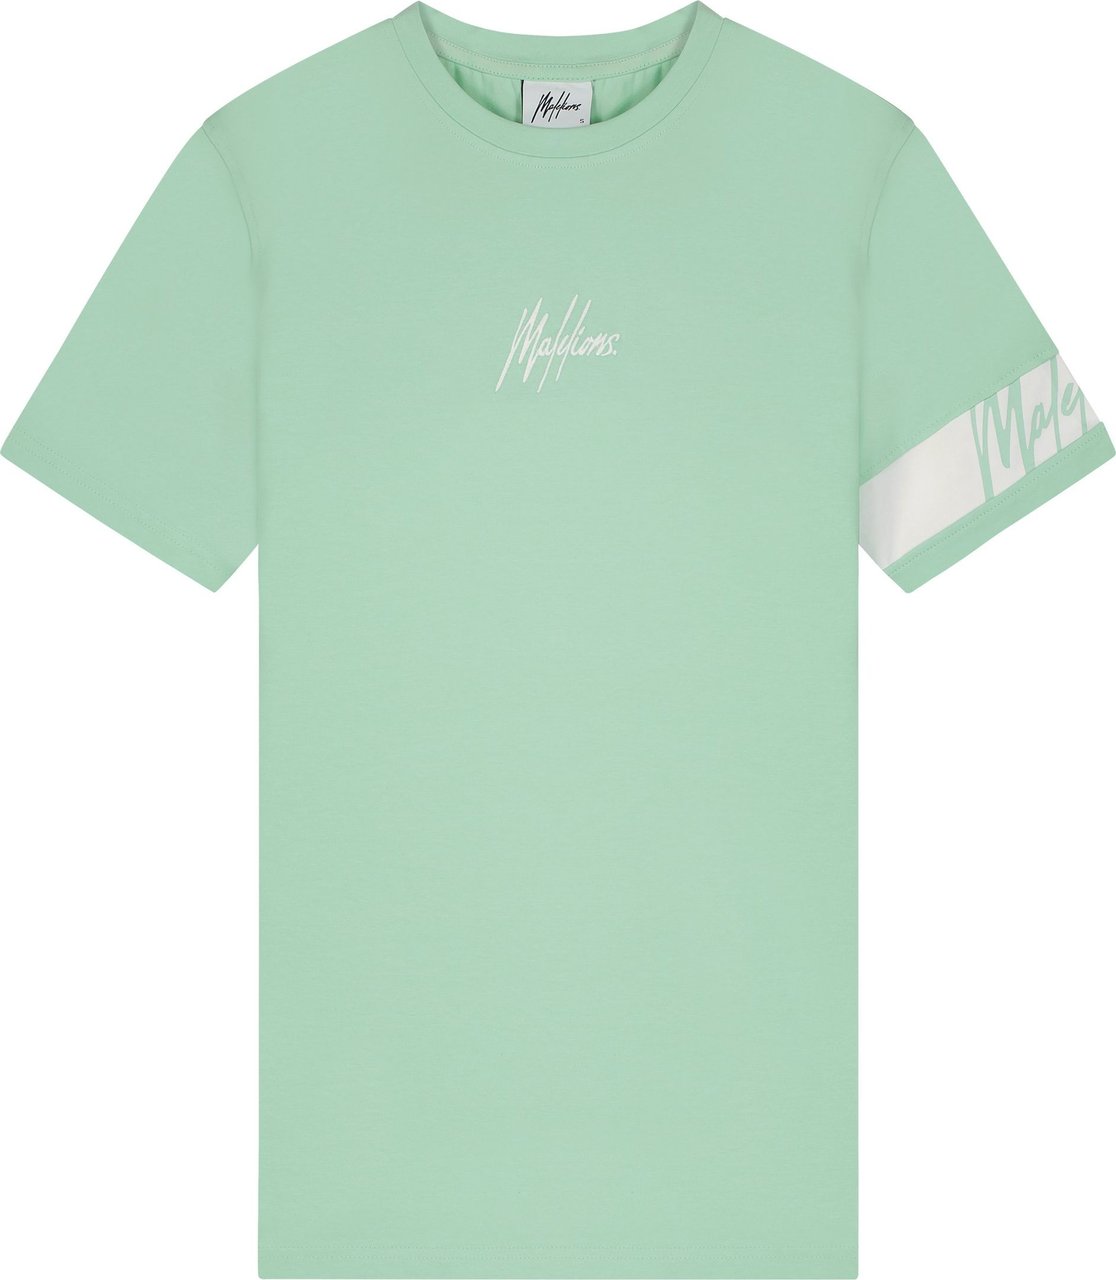 Malelions Captain T-Shirt - Mint Groen